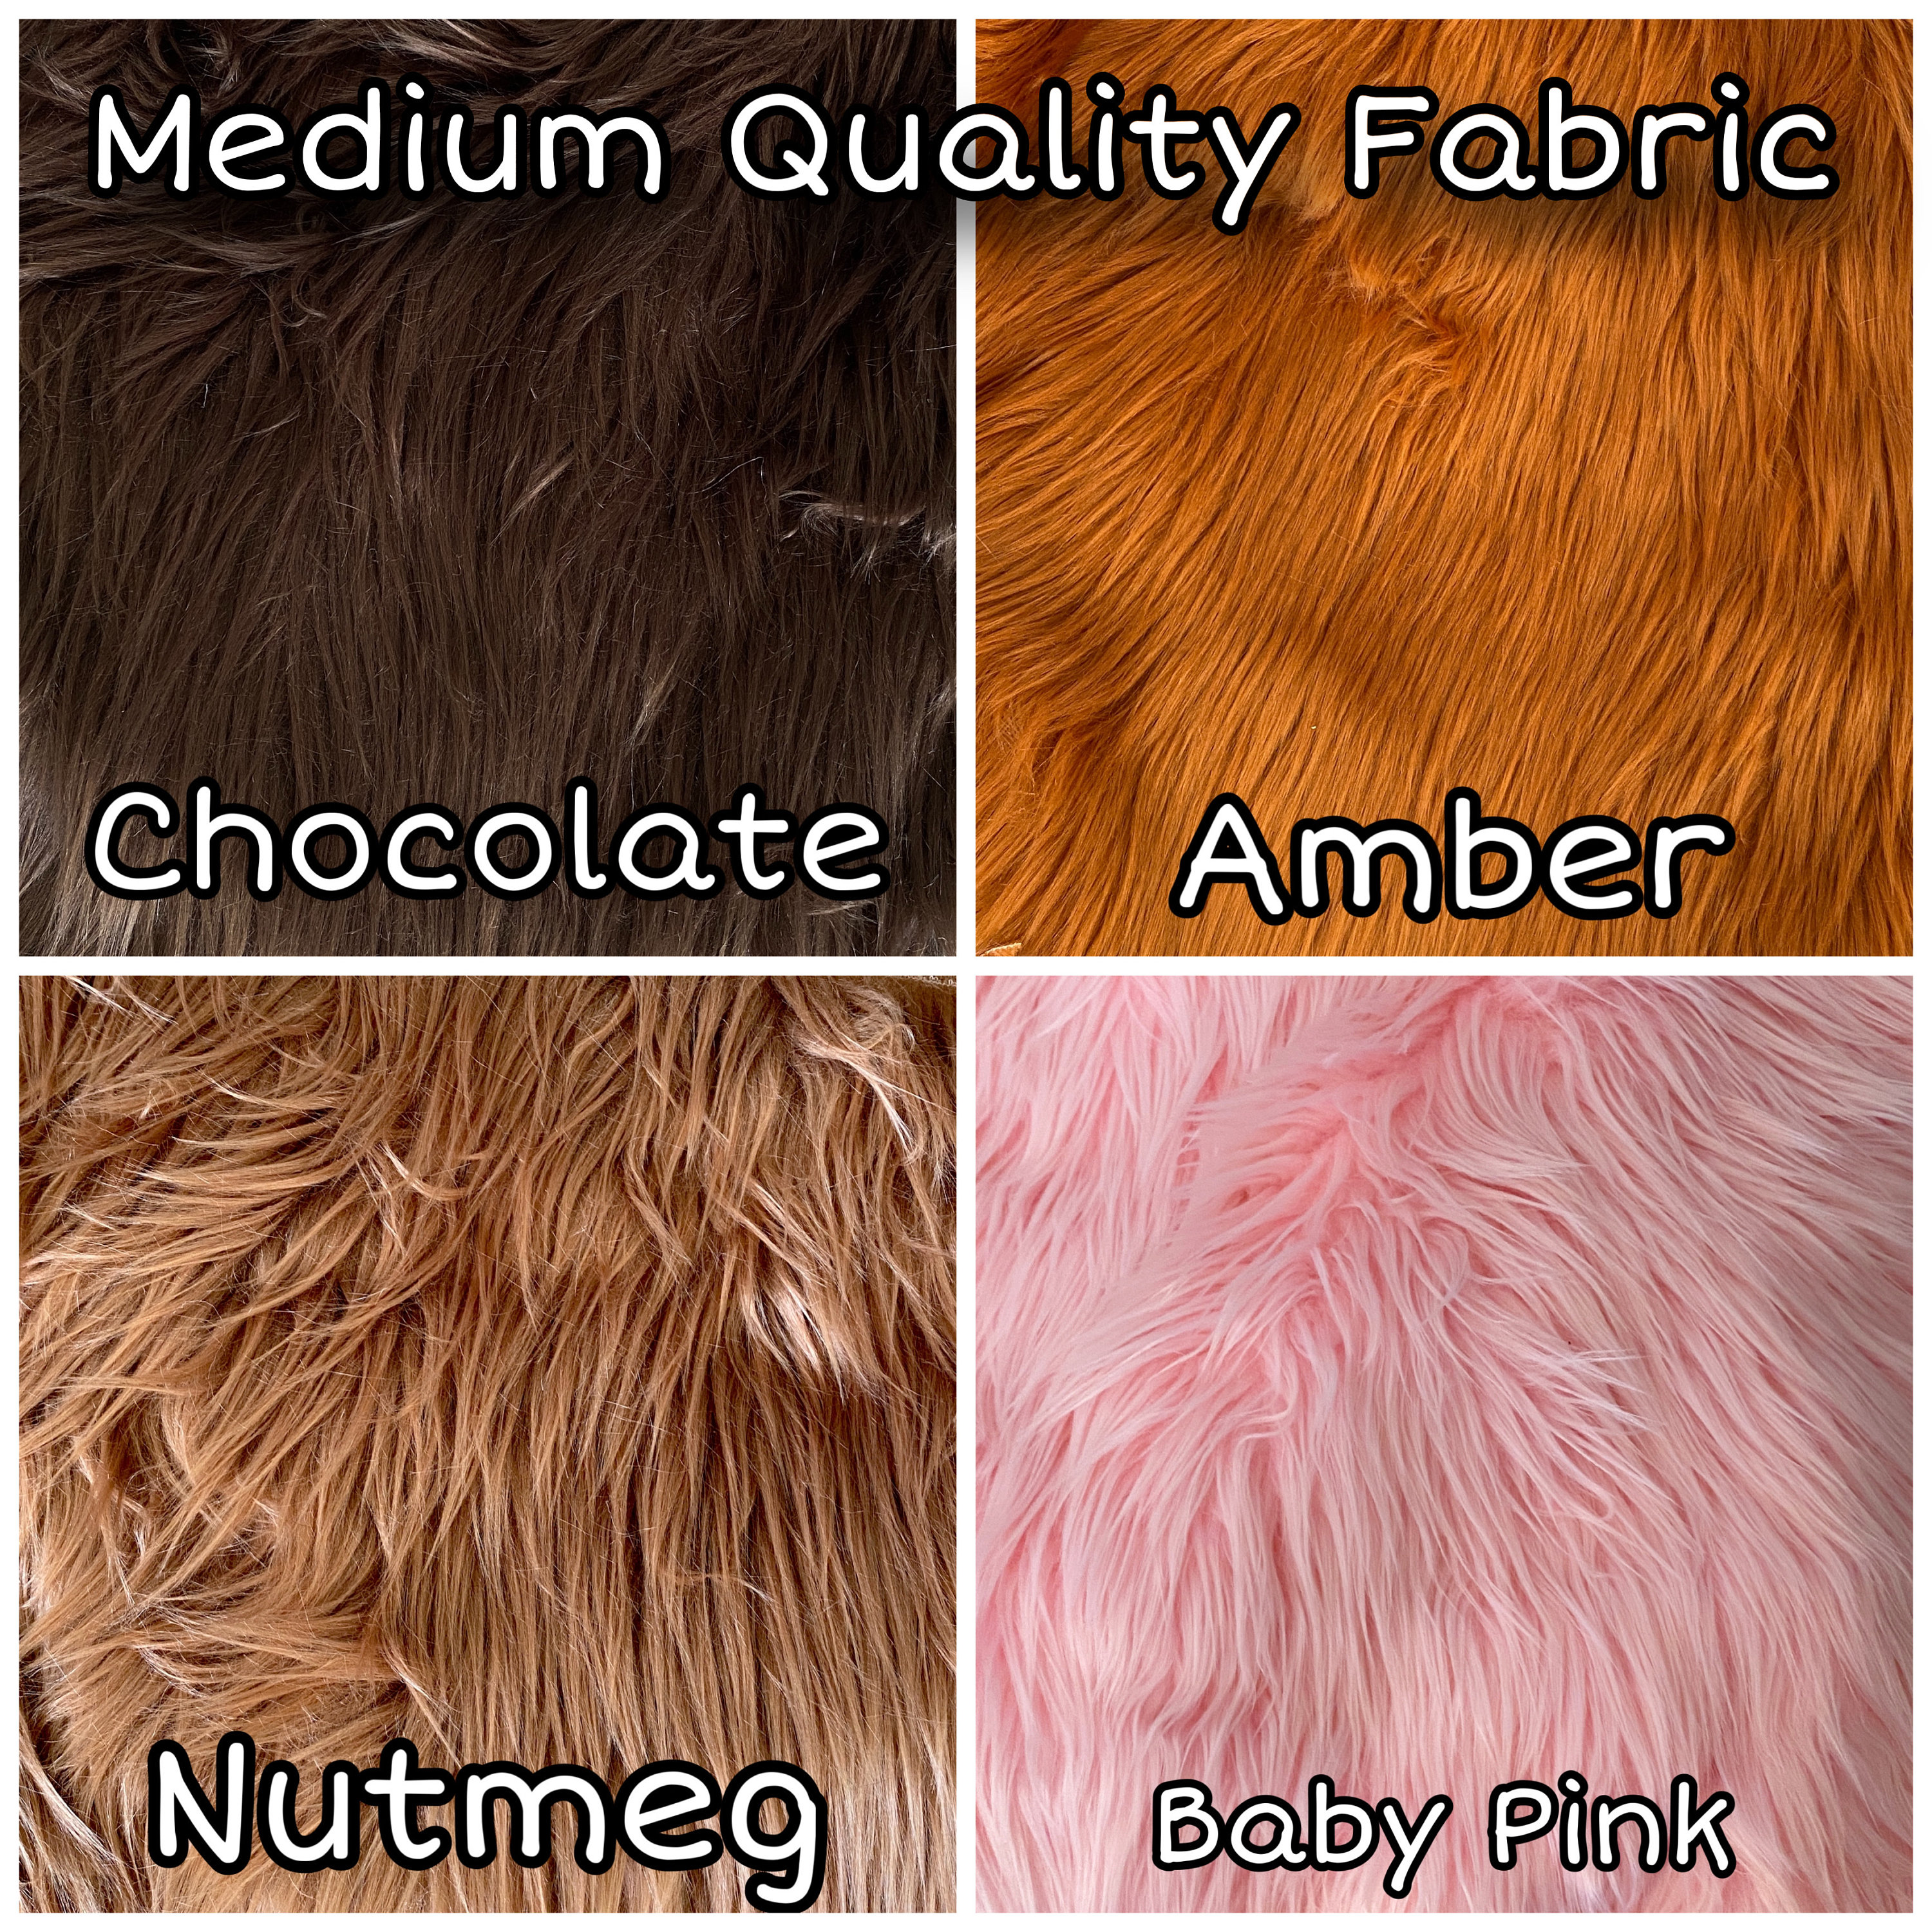 Brown Luxury Shag Faux Fur | Howl Fabric